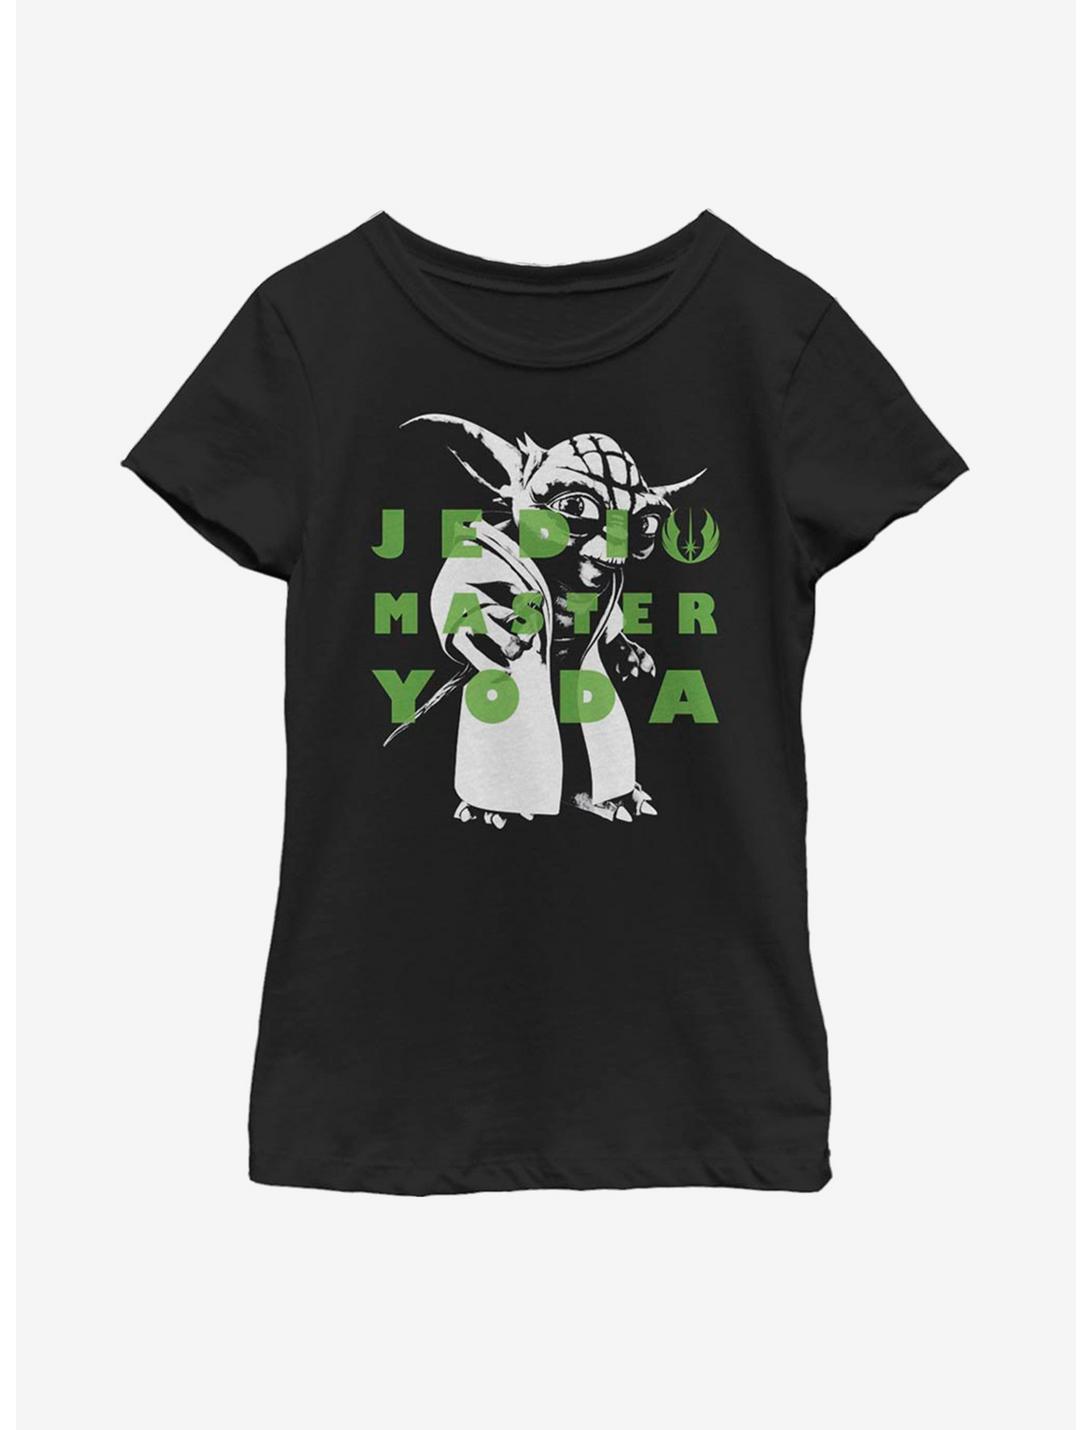 Star Wars: The Clone Wars Yoda Text Youth Girls T-Shirt, BLACK, hi-res